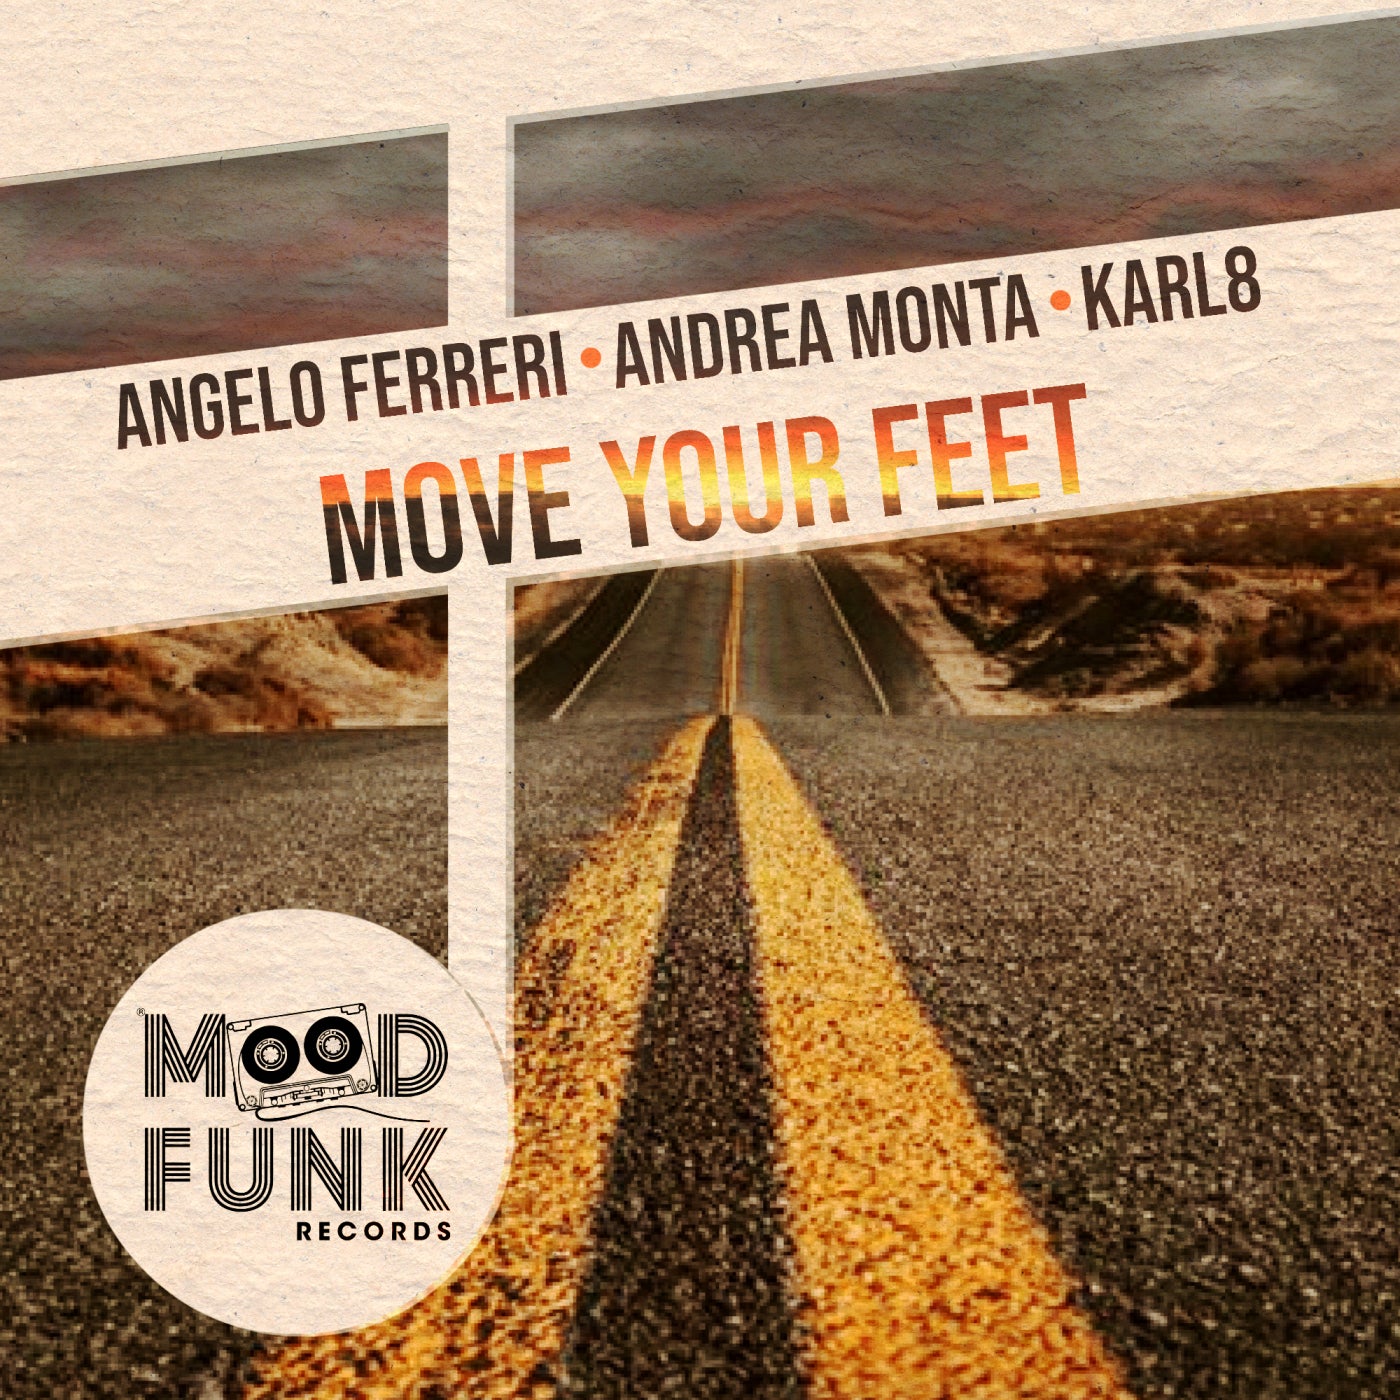 Angelo Ferreri, Andrea Monta, Karl8 - Move Your Feet (Original Mix)